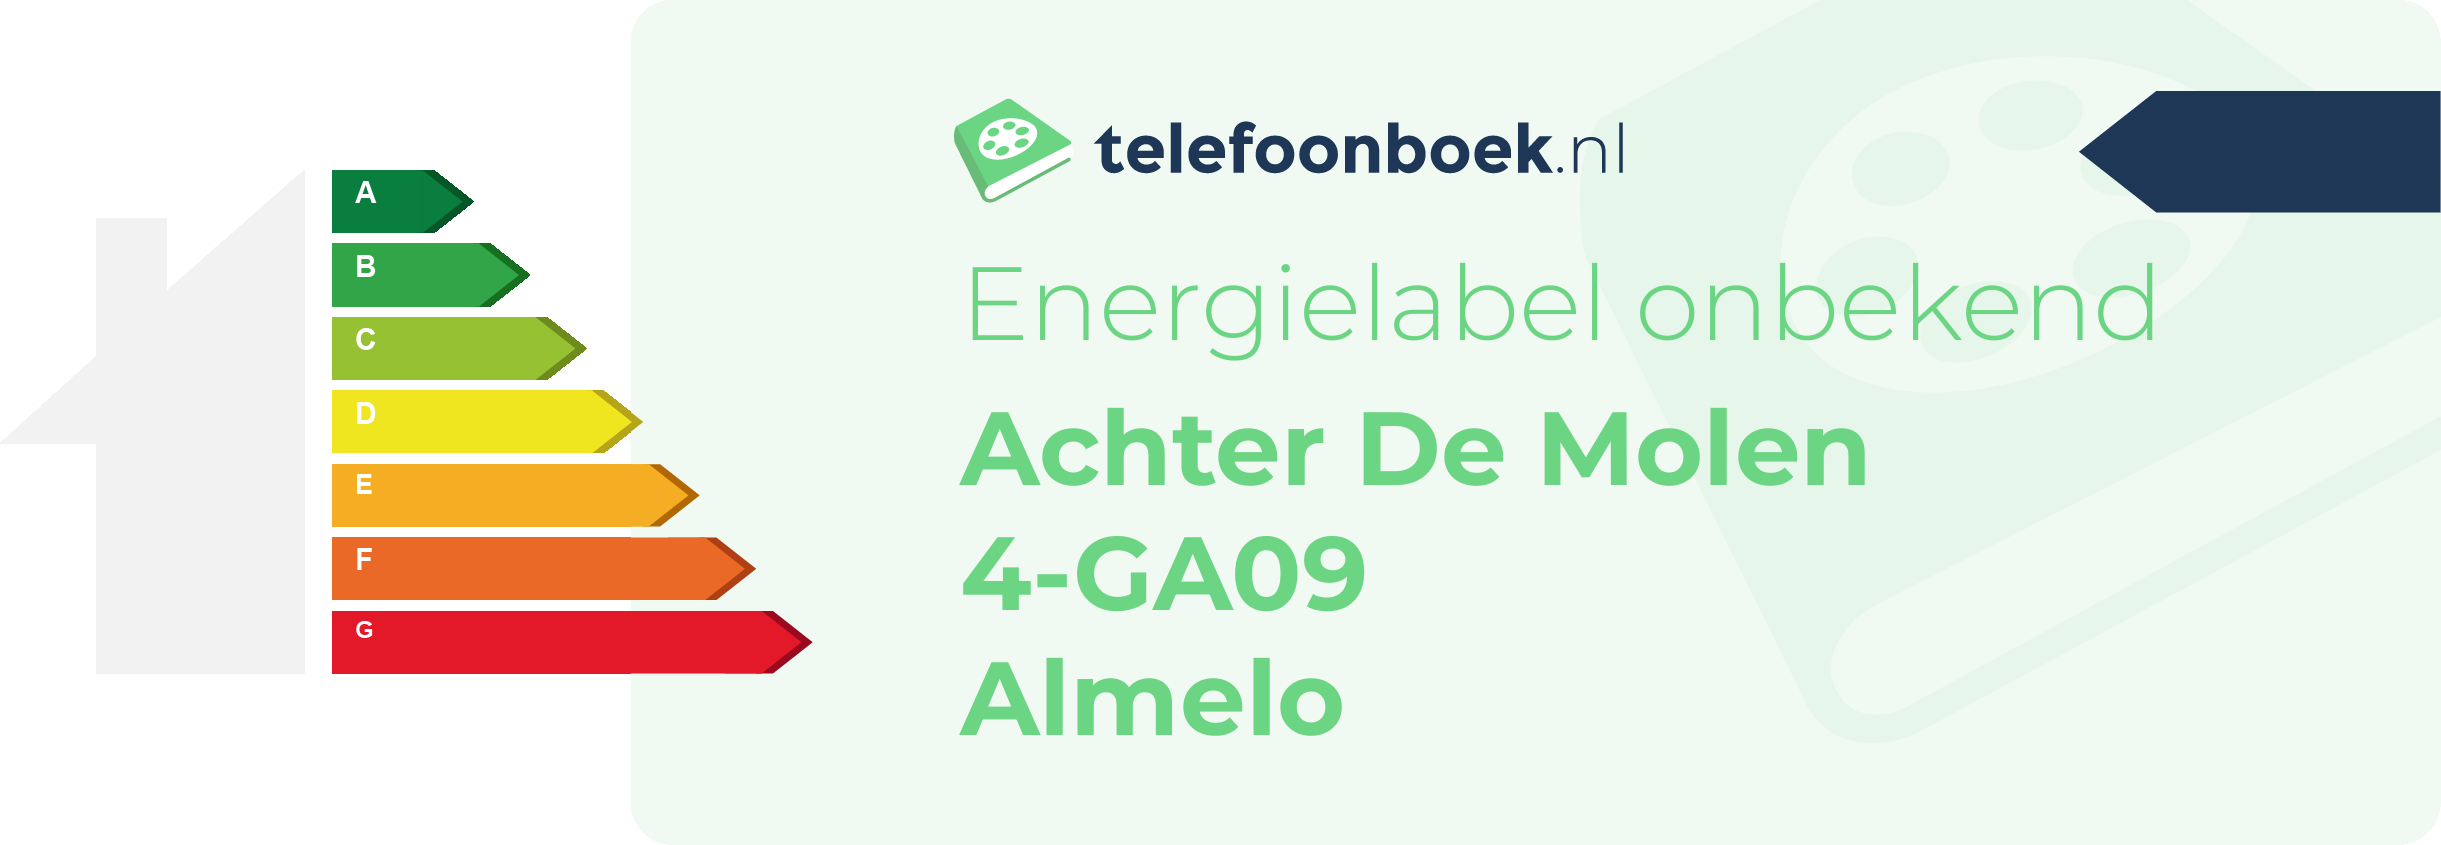 Energielabel Achter De Molen 4-GA09 Almelo